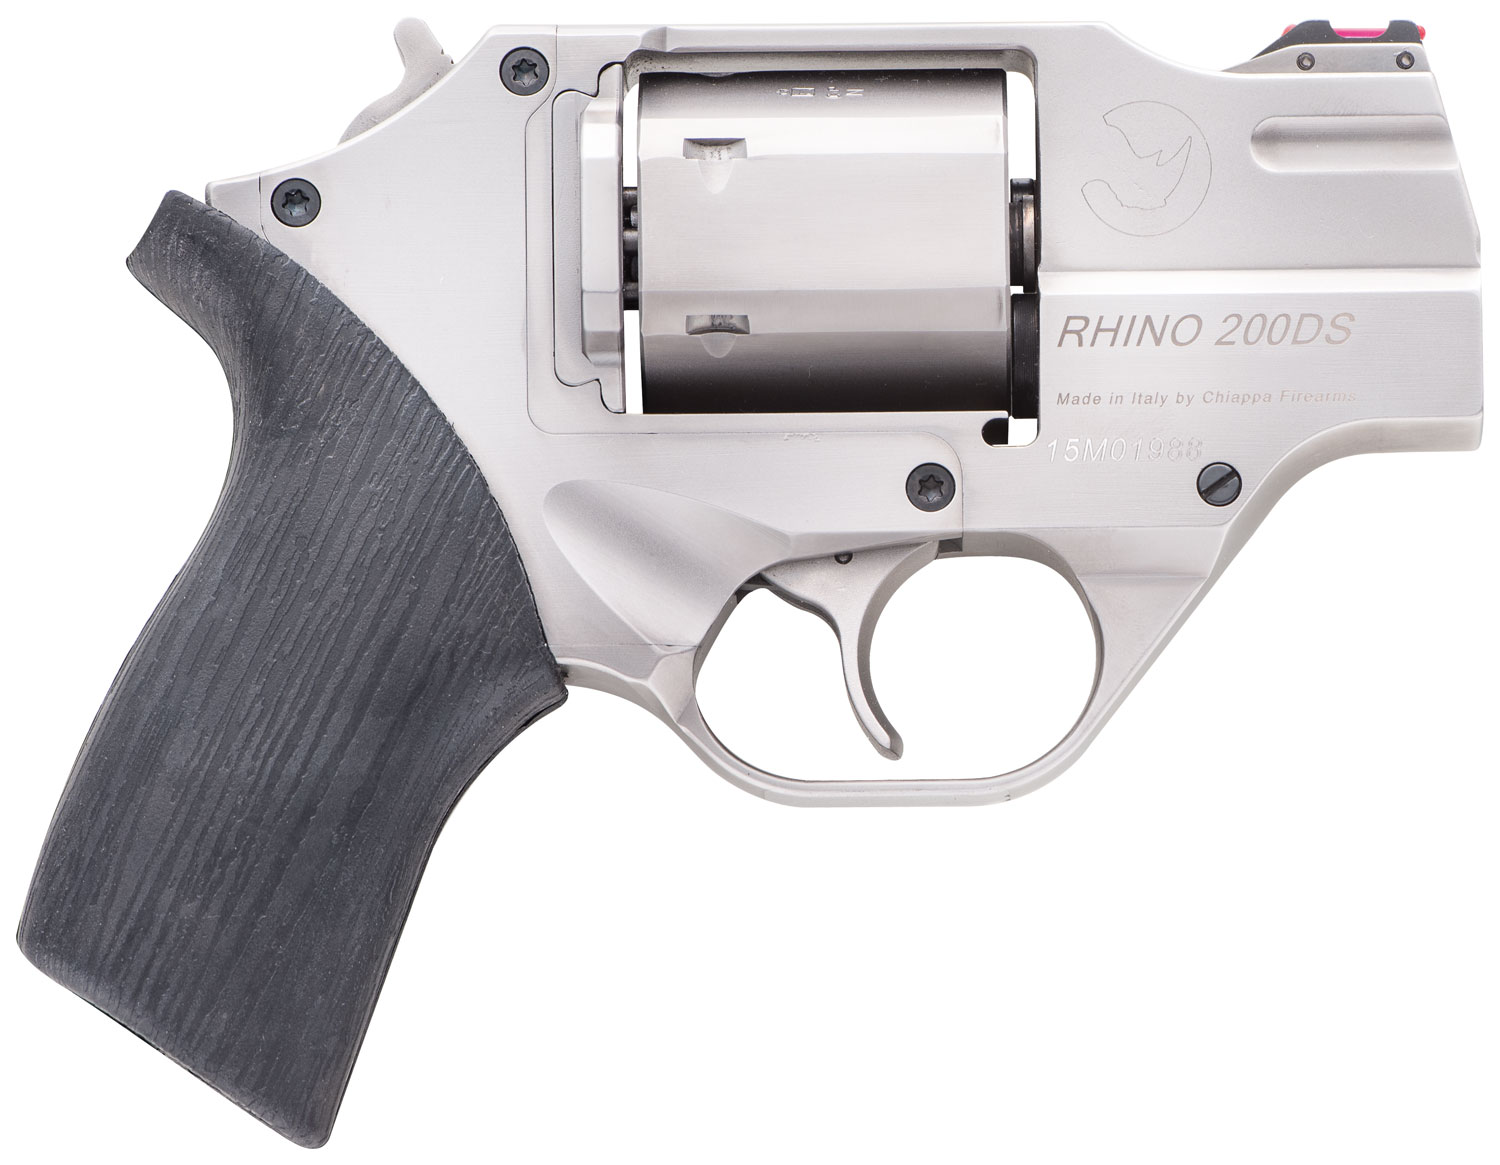 Chiappa Rhino Revolver CF340218, 357 Mag, 2", Black Rubber Grip, Nickel-Plated Finish, 6 Rd